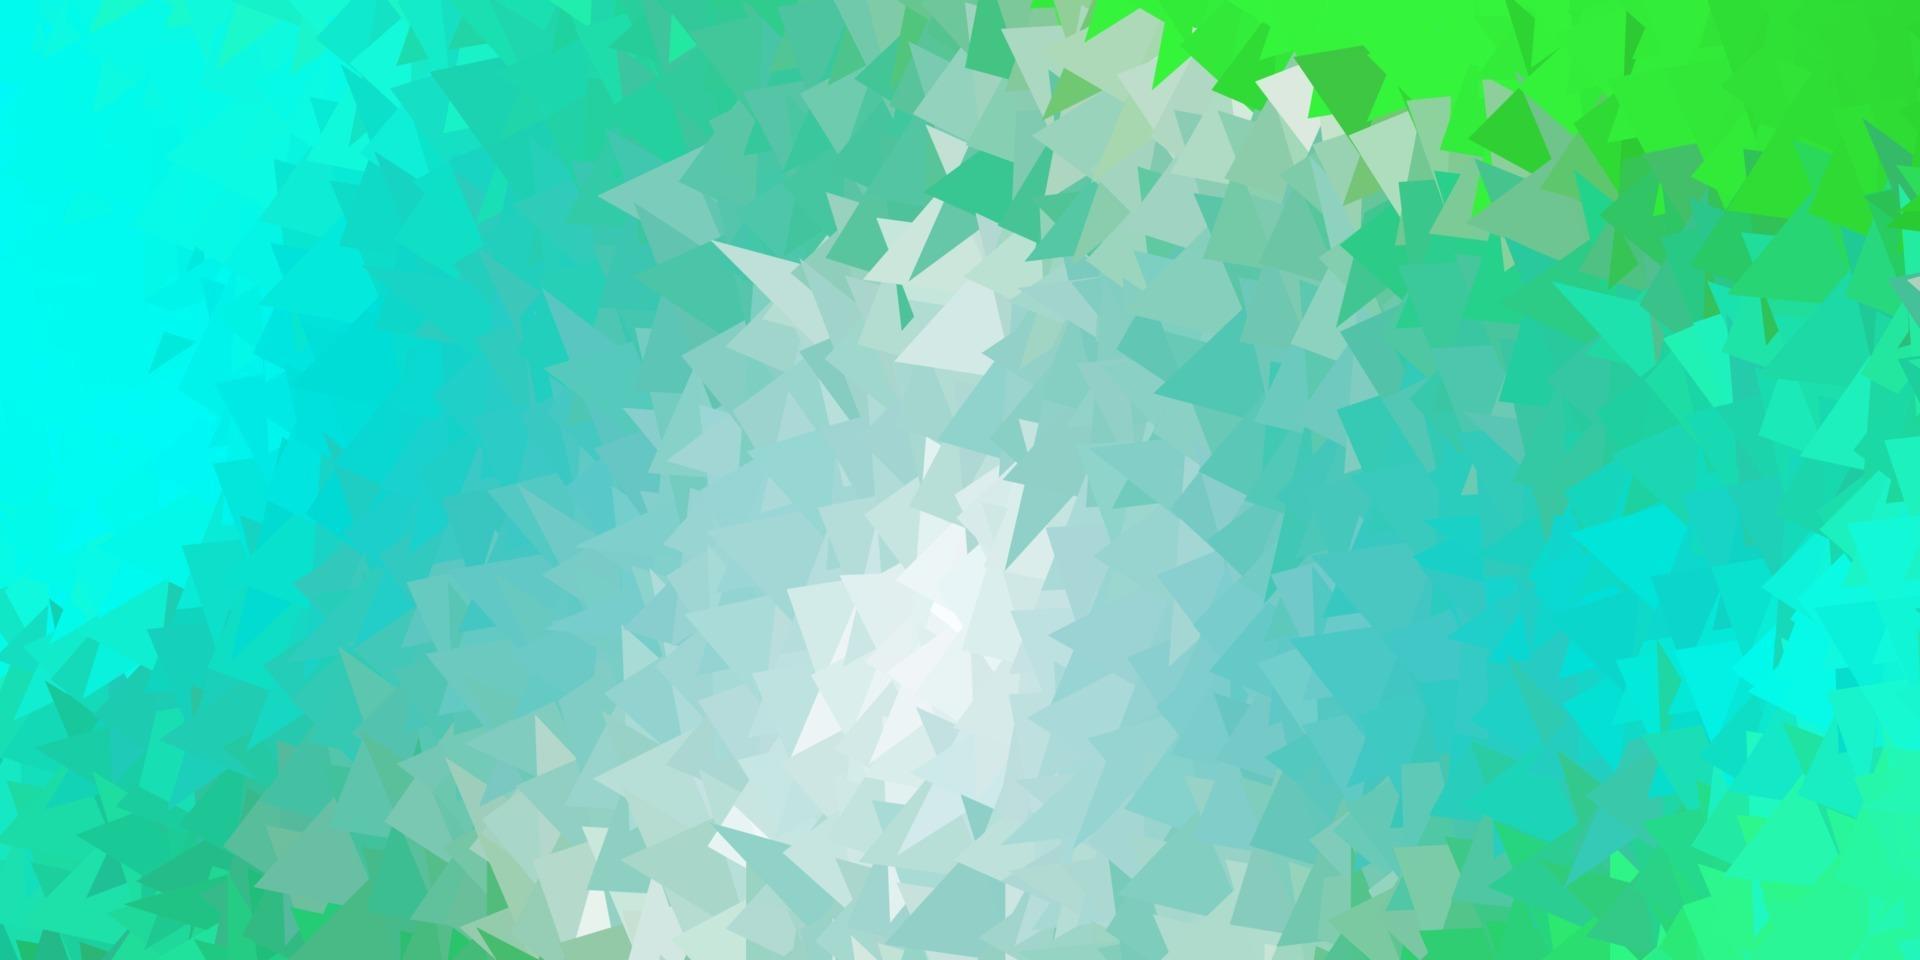 projeto poligonal geométrico do vetor verde claro.